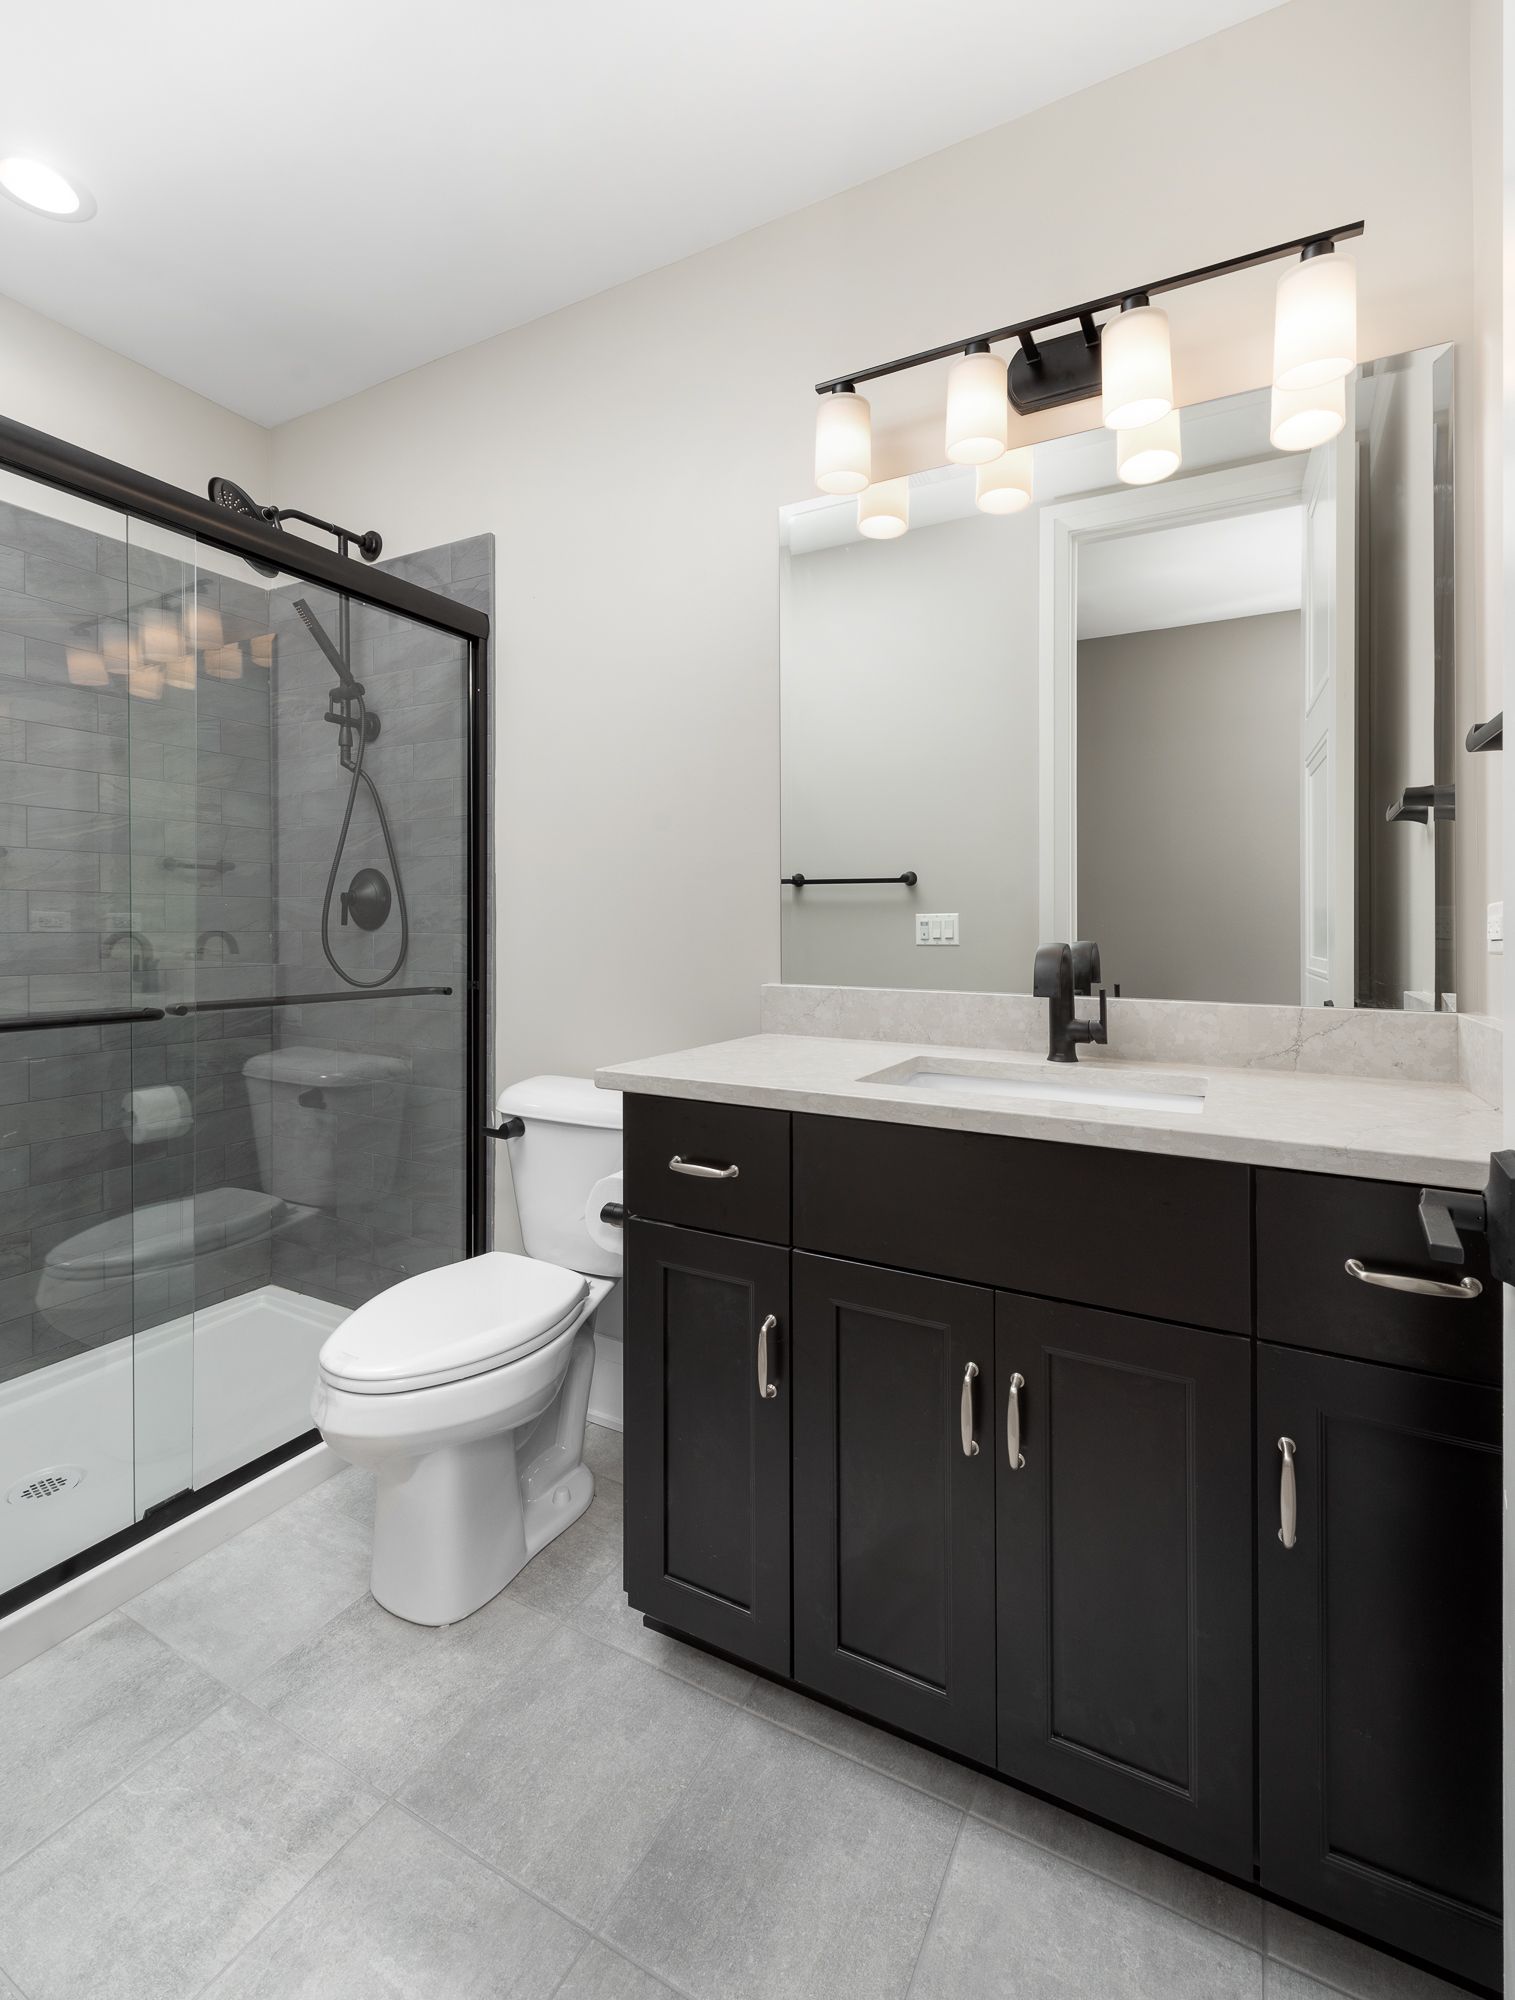 Guest bathroom with sliding glass shower doors and dark wood vanity